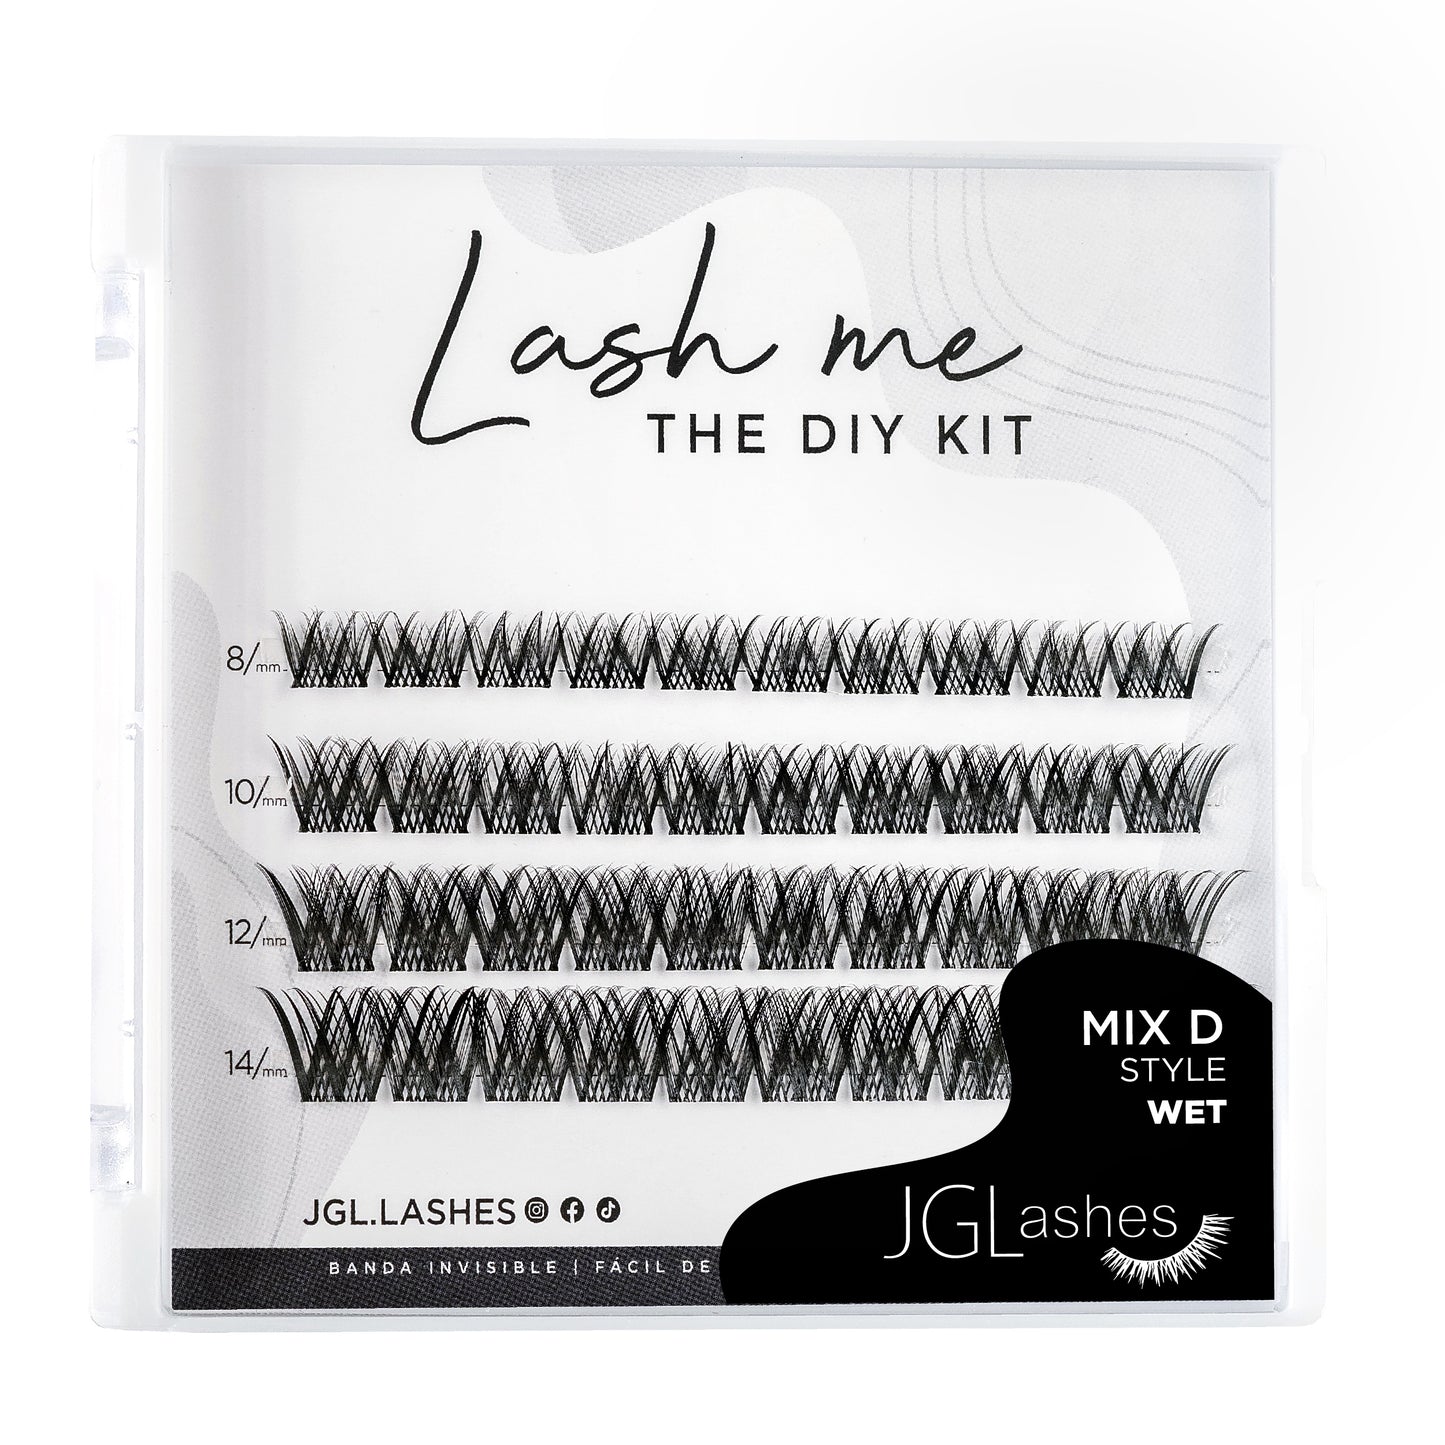 Lash me. The DIY Kit Wet